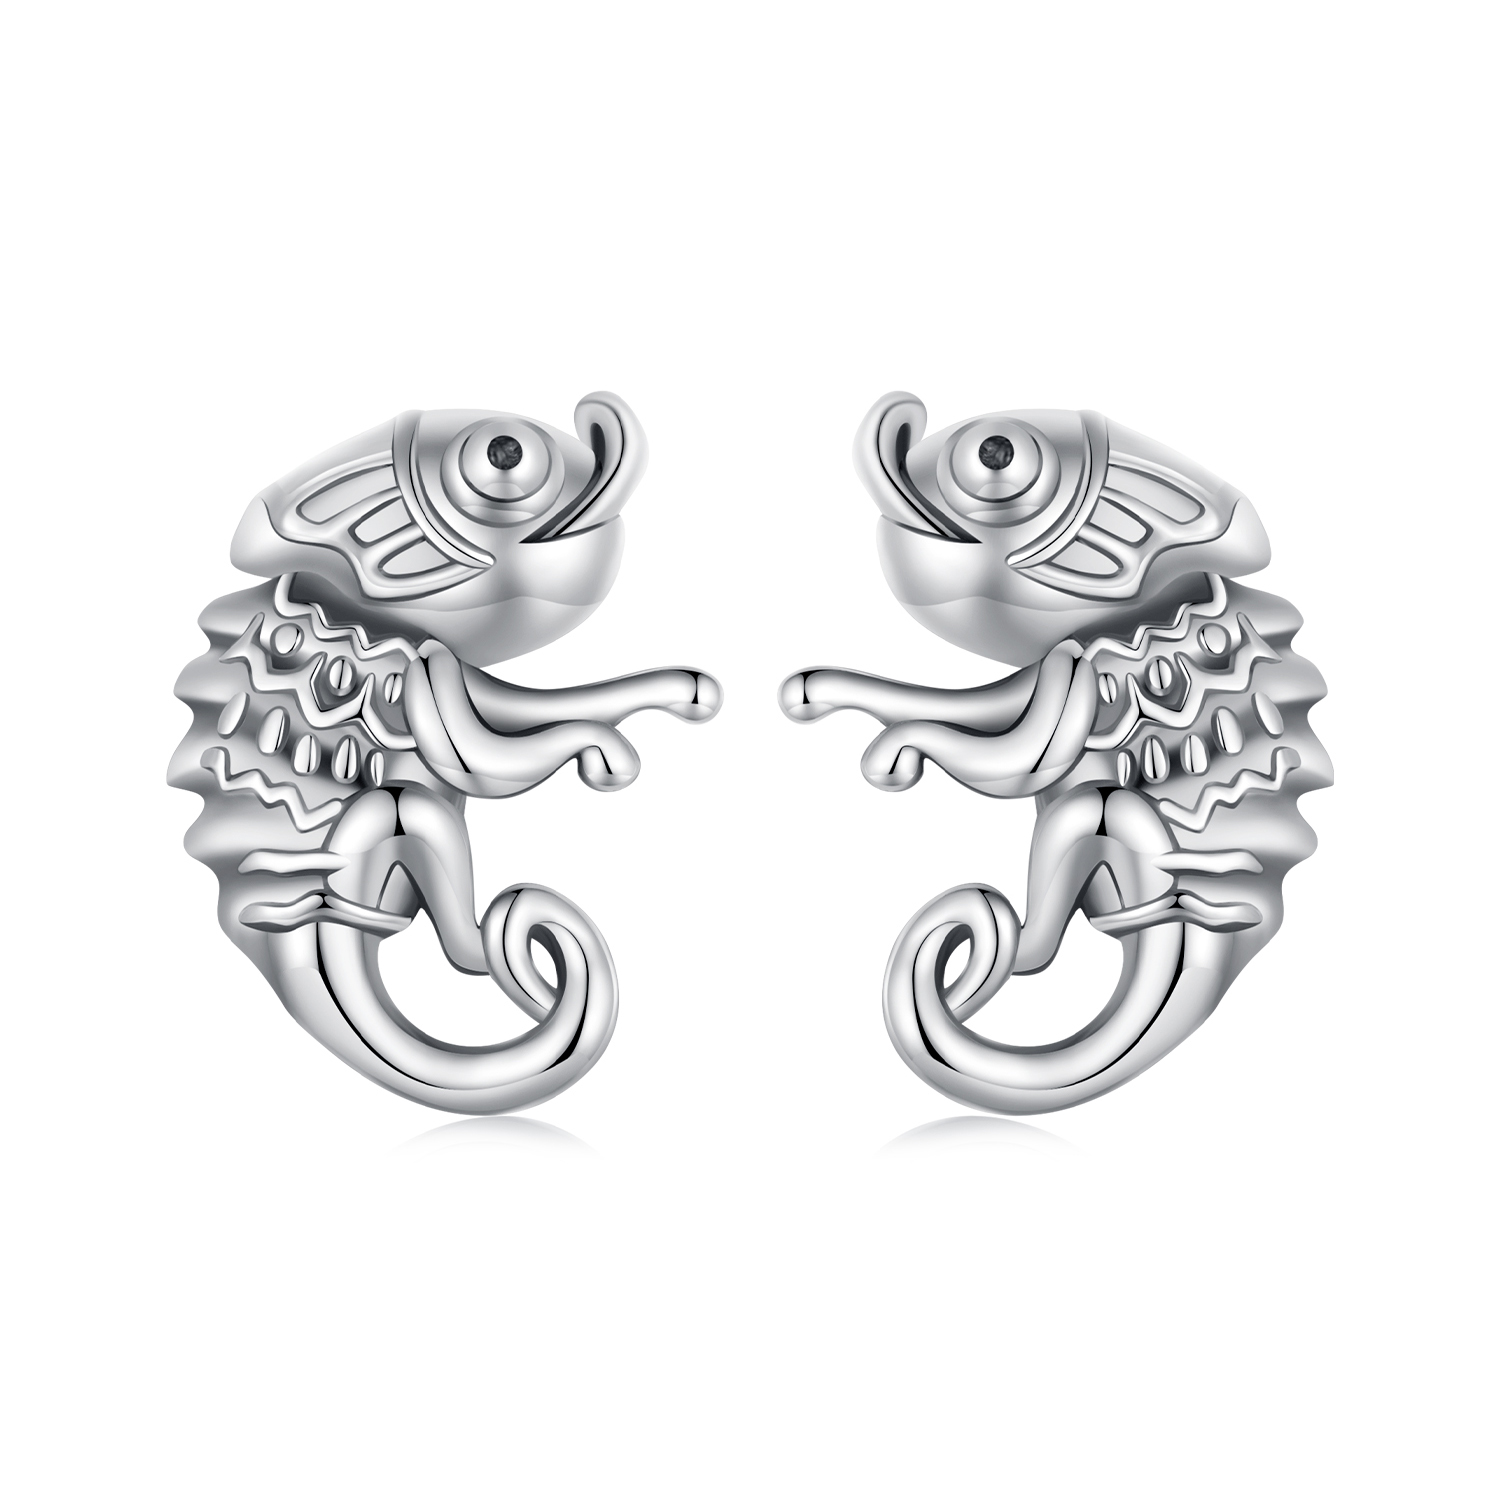 pandora style chameleon studs earrings sce1661